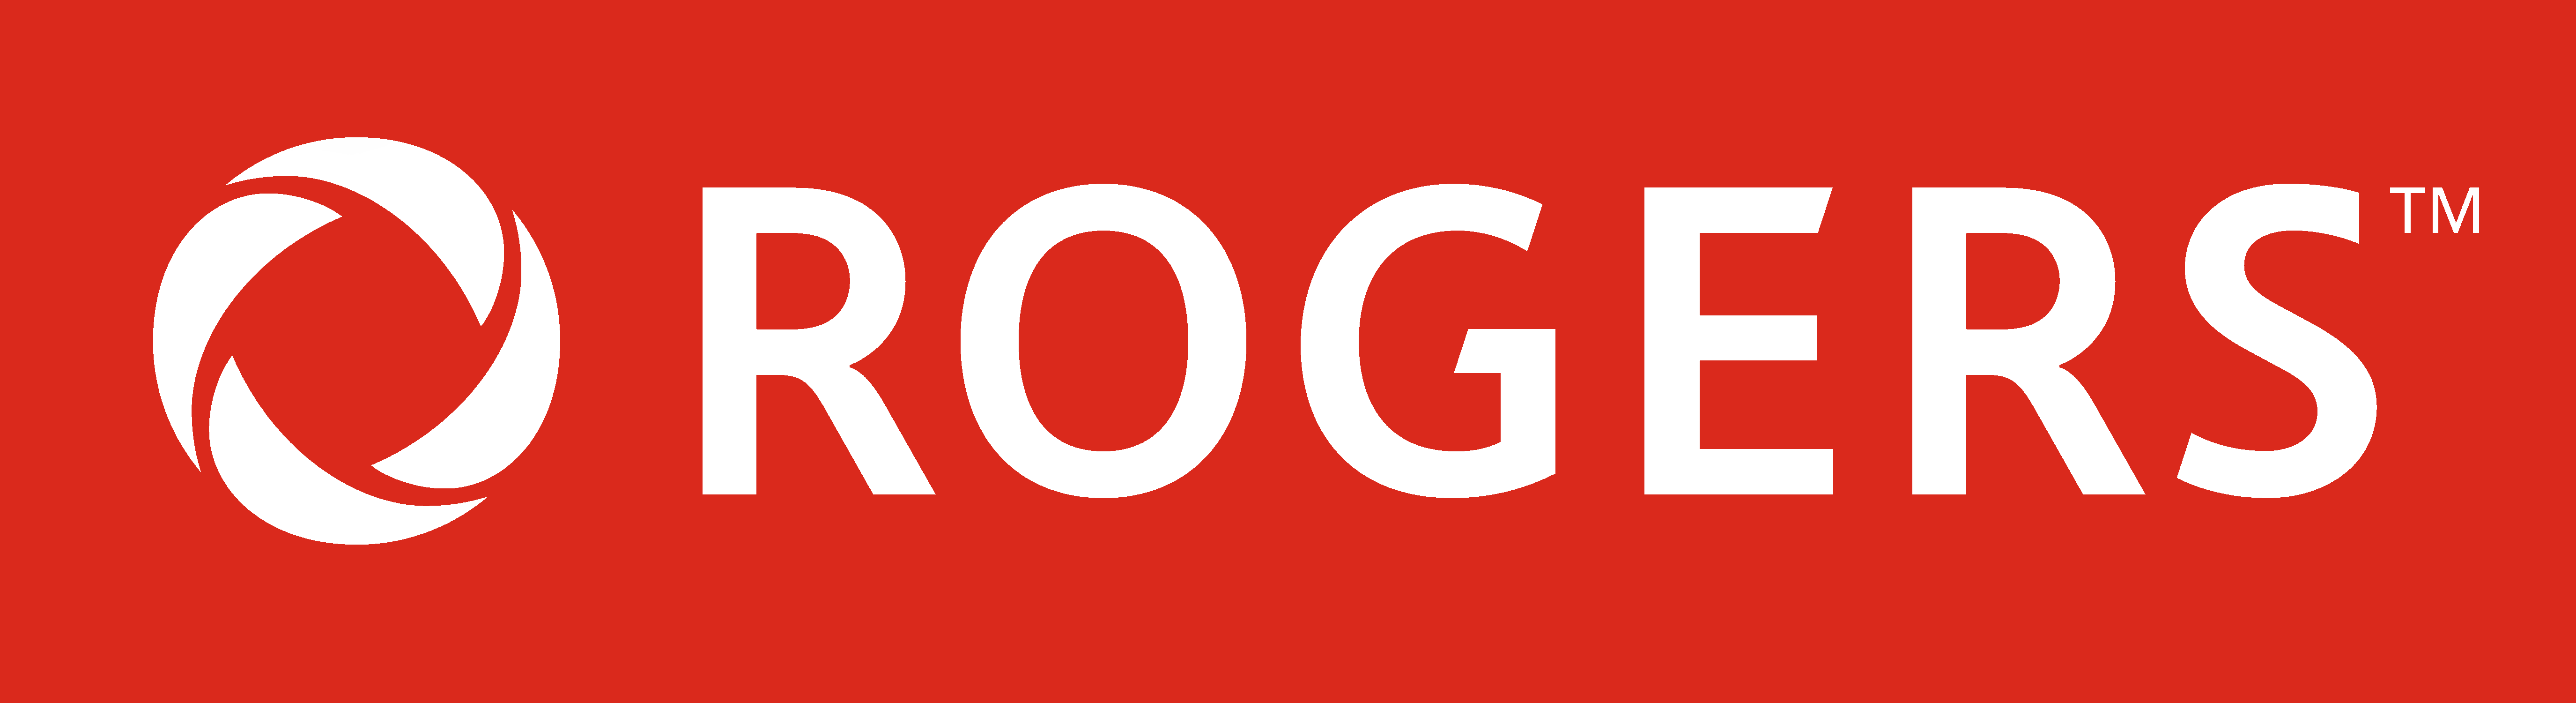 Rogers Logo - Rogers – Logos Download